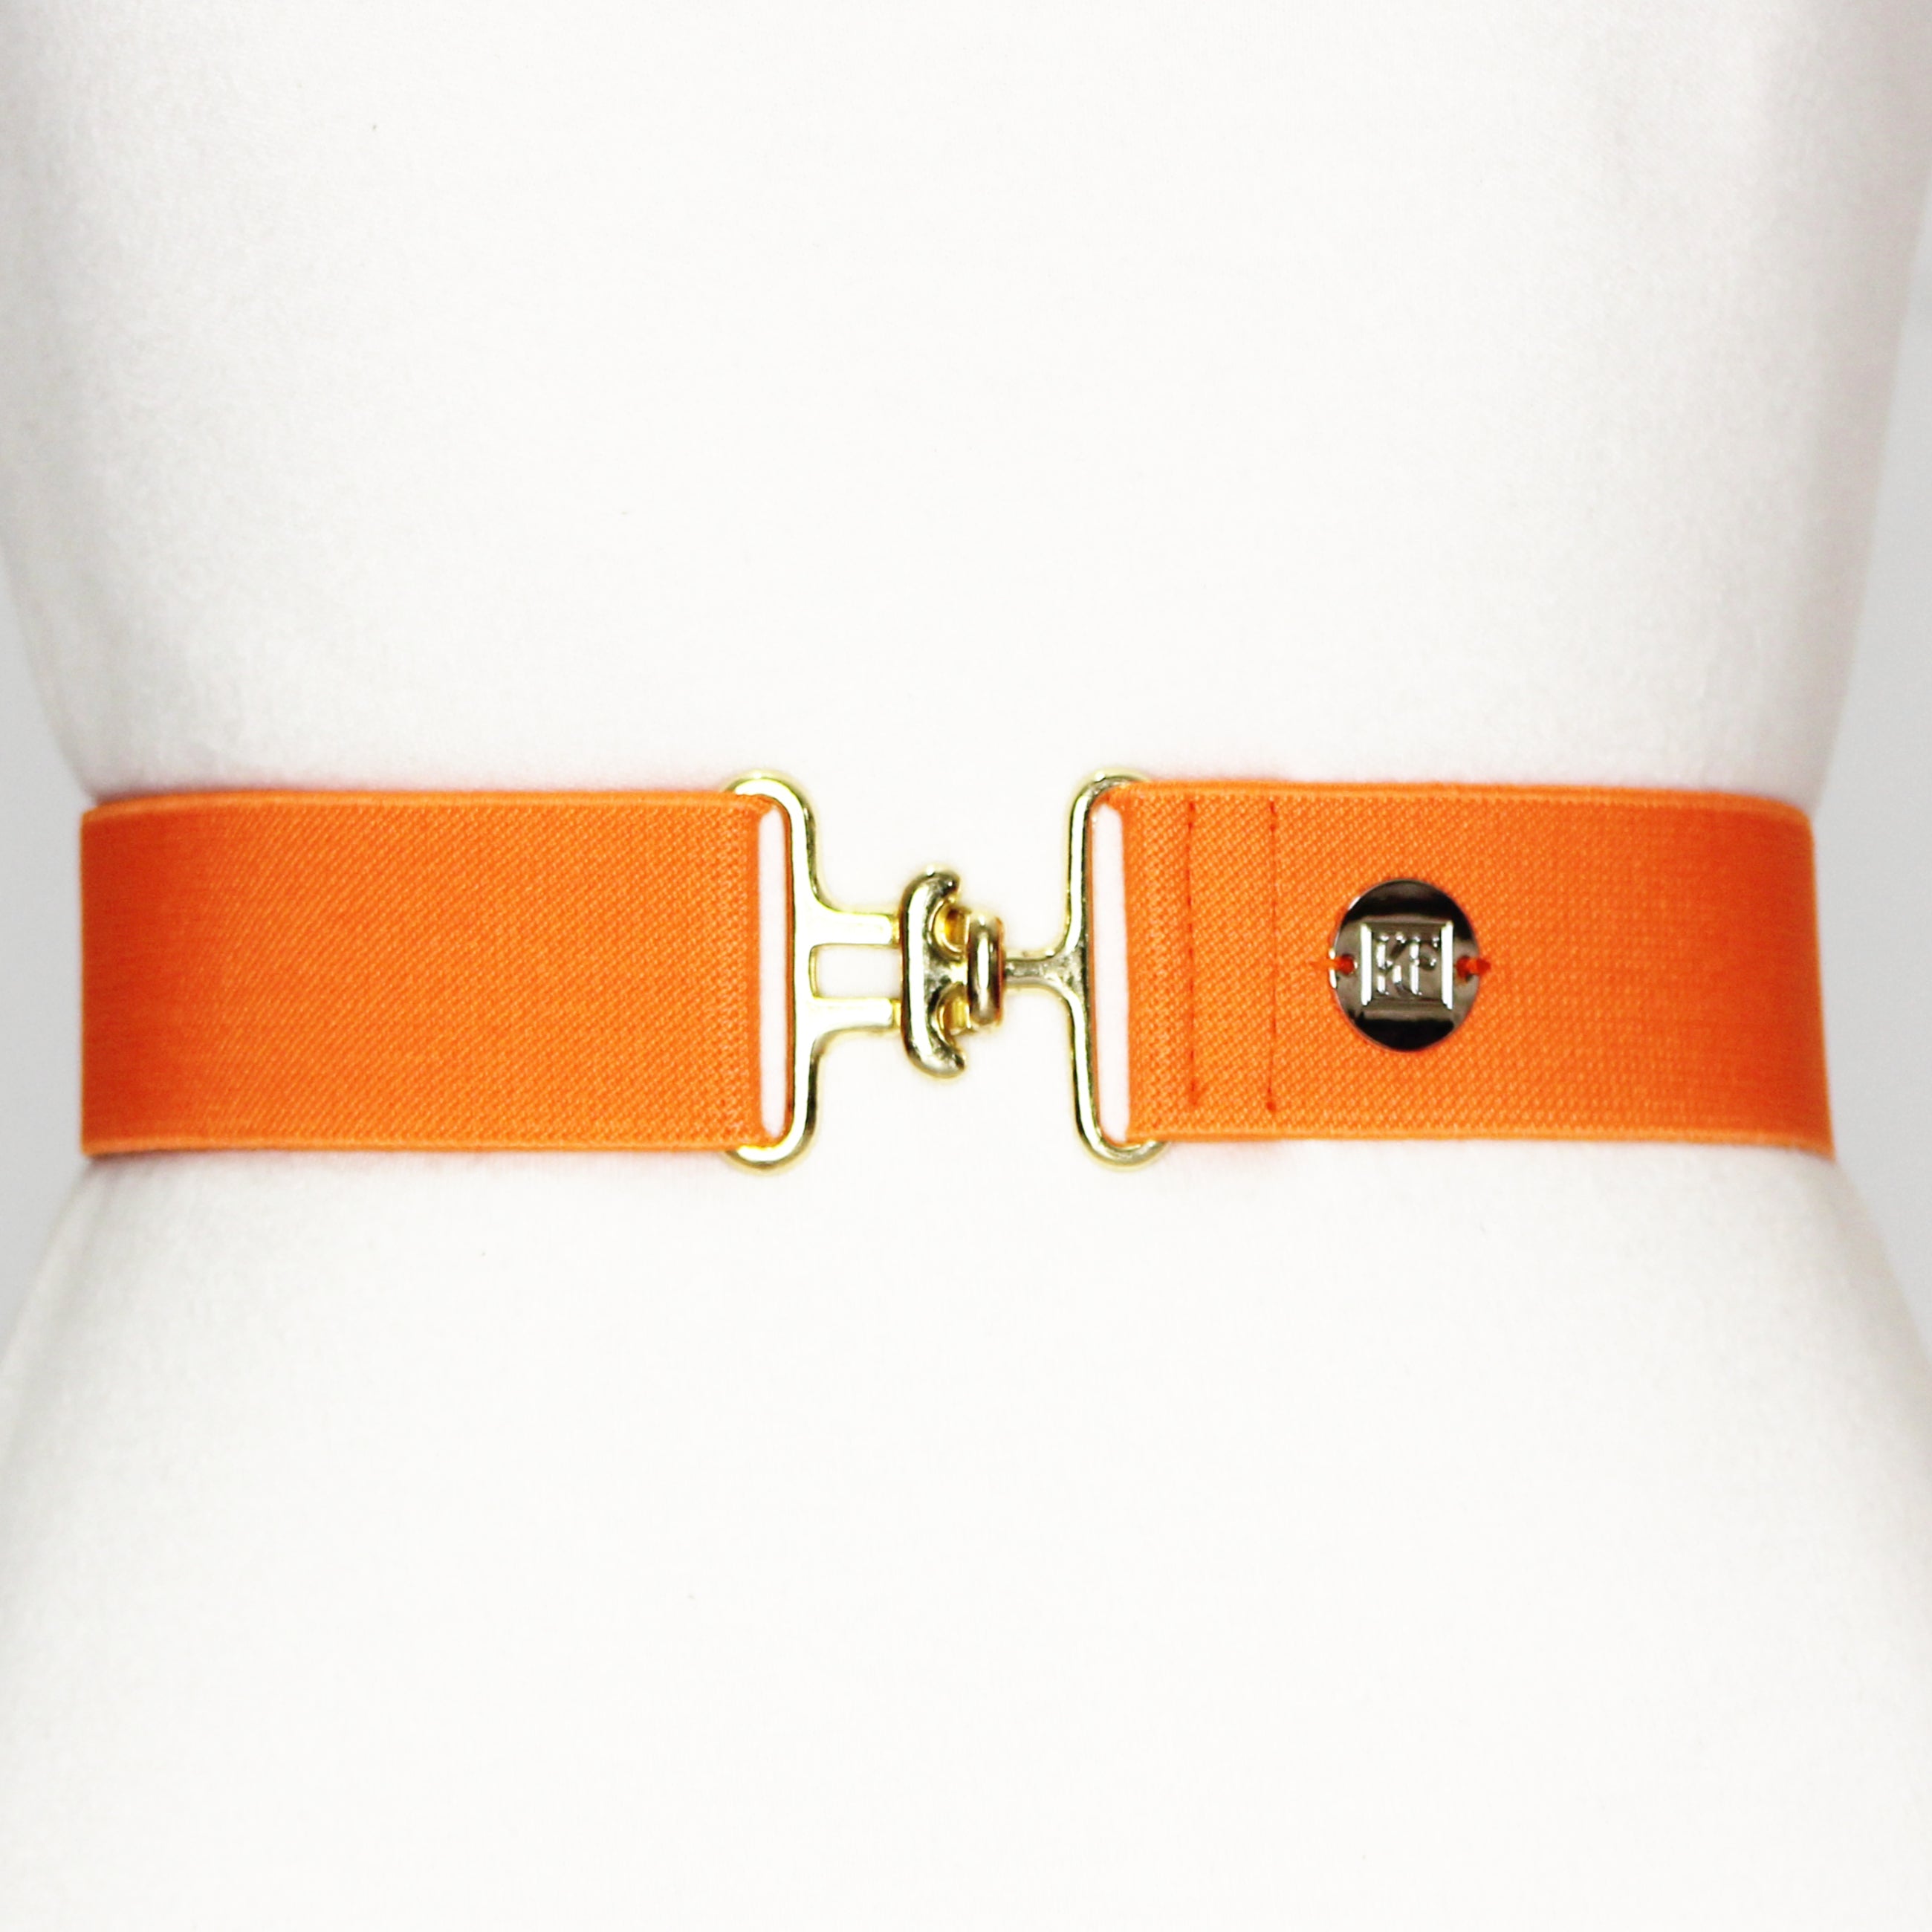 Orange elastic belt with 1.5" gold surcingle buckle by KF Clothing